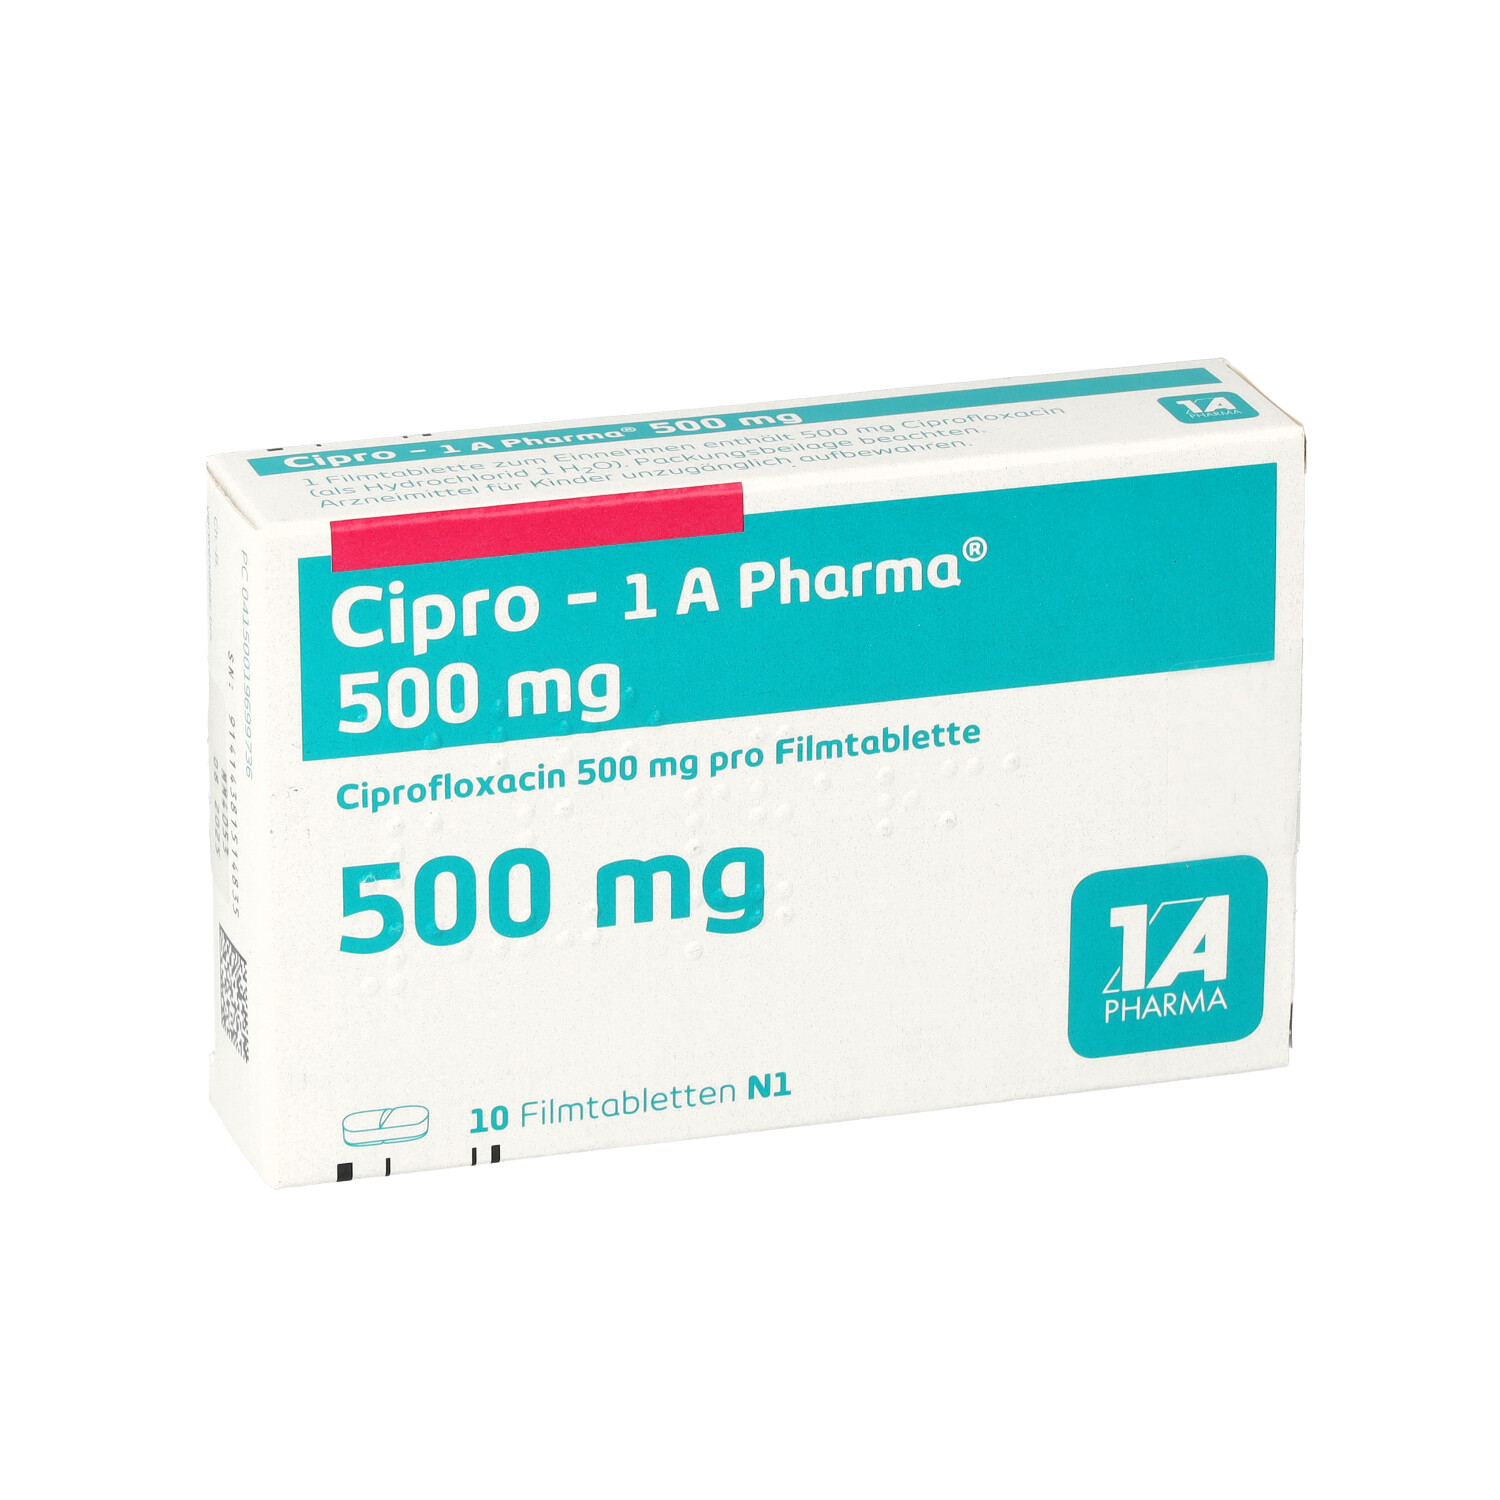 CIPRO-1A Pharma 500 mg Filmtabletten